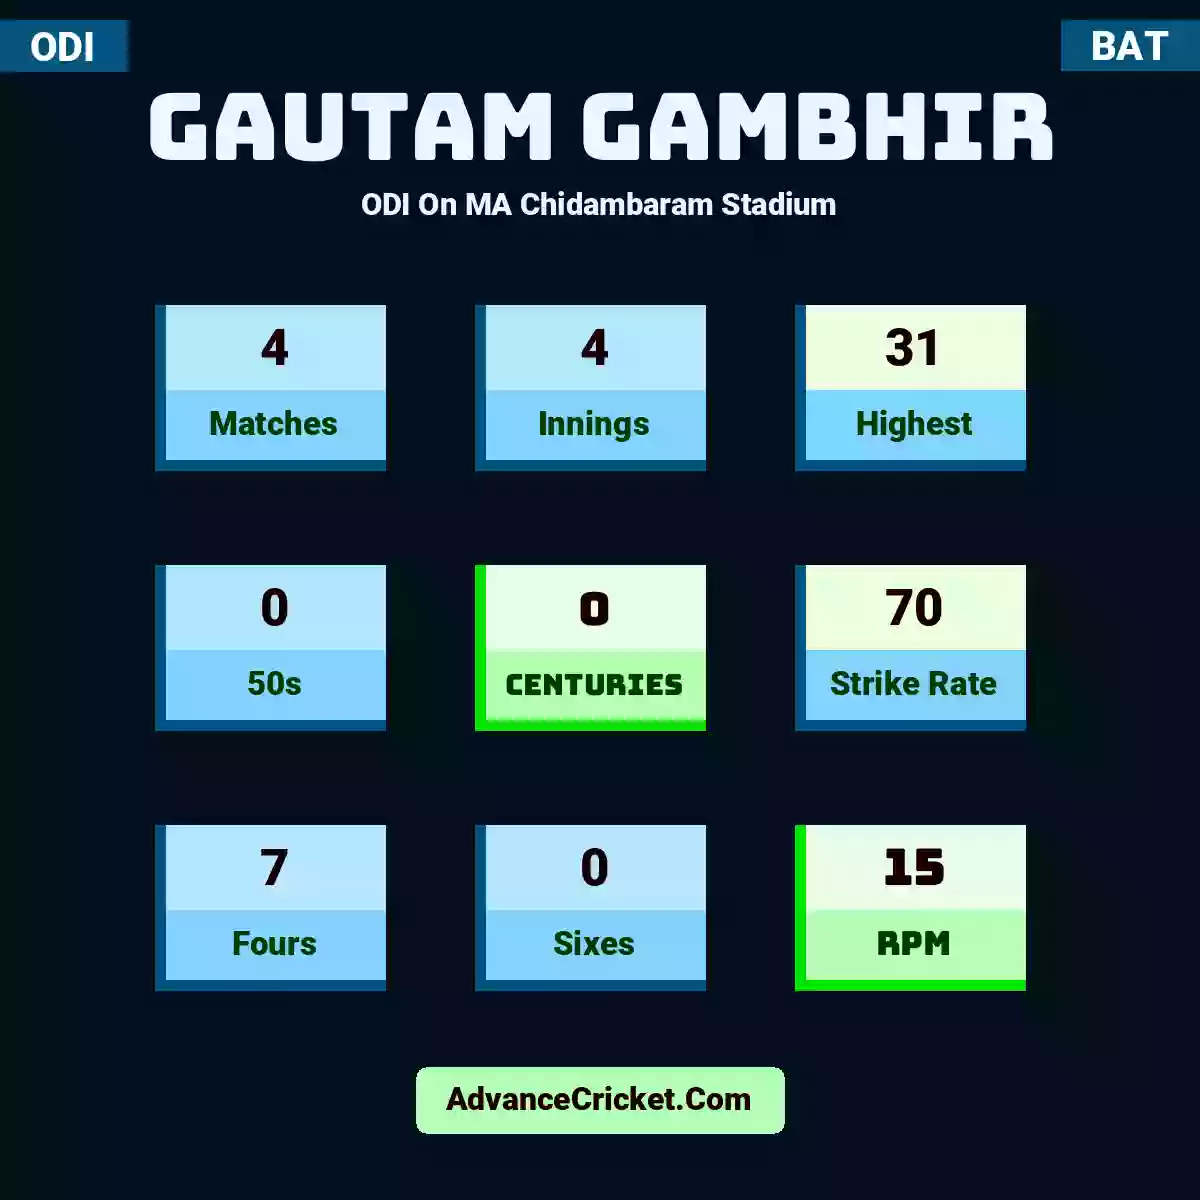 Gautam Gambhir ODI  On MA Chidambaram Stadium, Gautam Gambhir played 4 matches, scored 31 runs as highest, 0 half-centuries, and 0 centuries, with a strike rate of 70. G.Gambhir hit 7 fours and 0 sixes, with an RPM of 15.